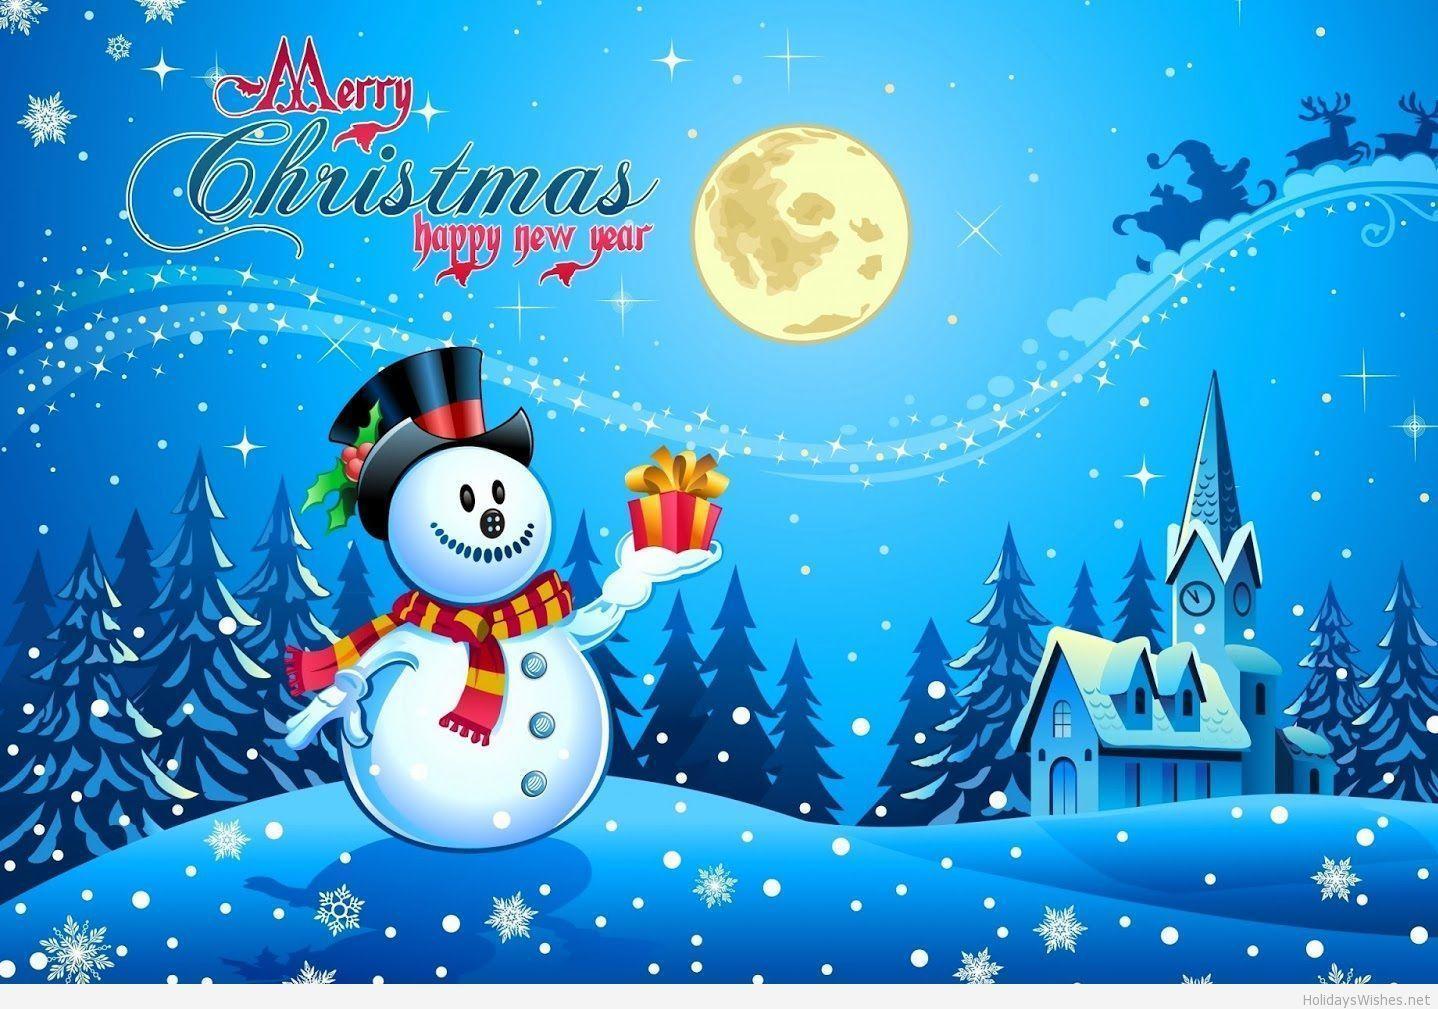 Funny Merry Christmas snowman wallpaper HD free